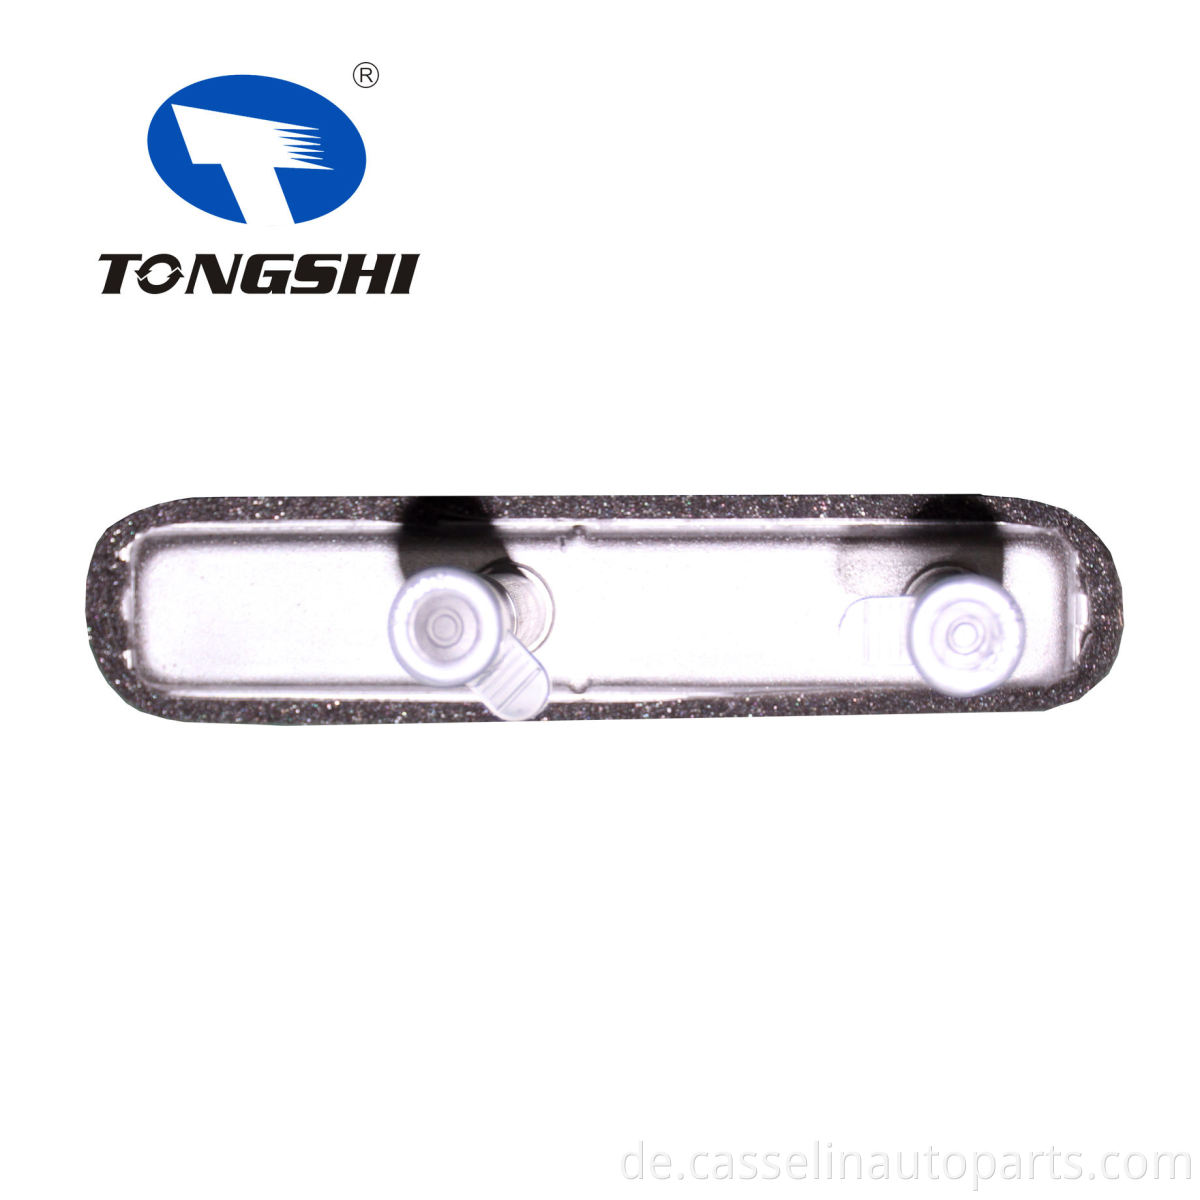 Tongshi Iatf16949 Auto Aluminiumheizungskern für Nisan Succe 1,6L